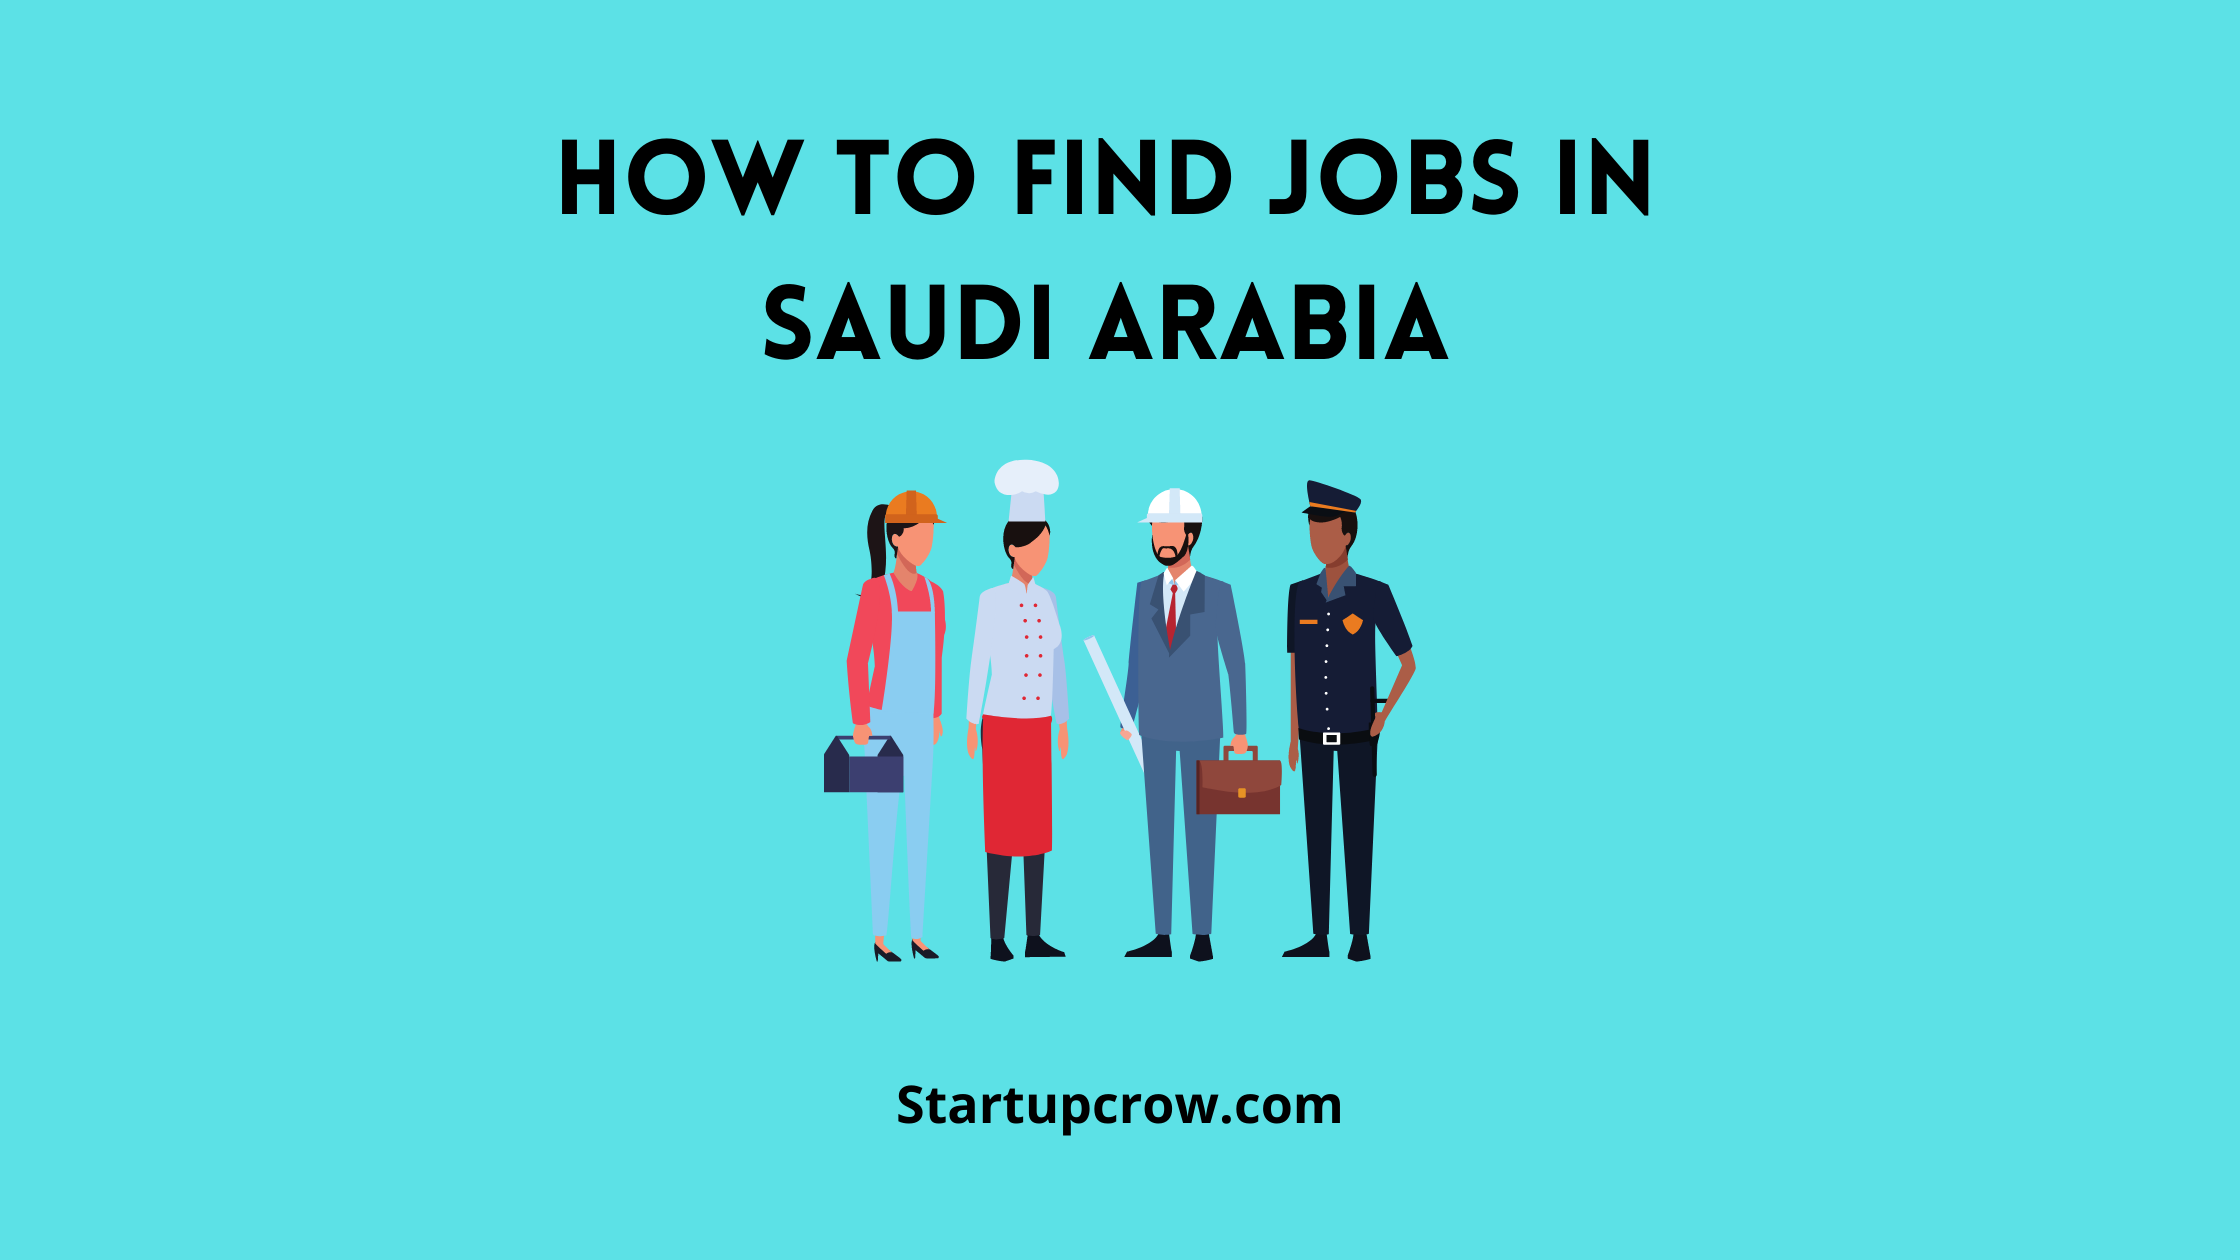 phd economics job in saudi arabia